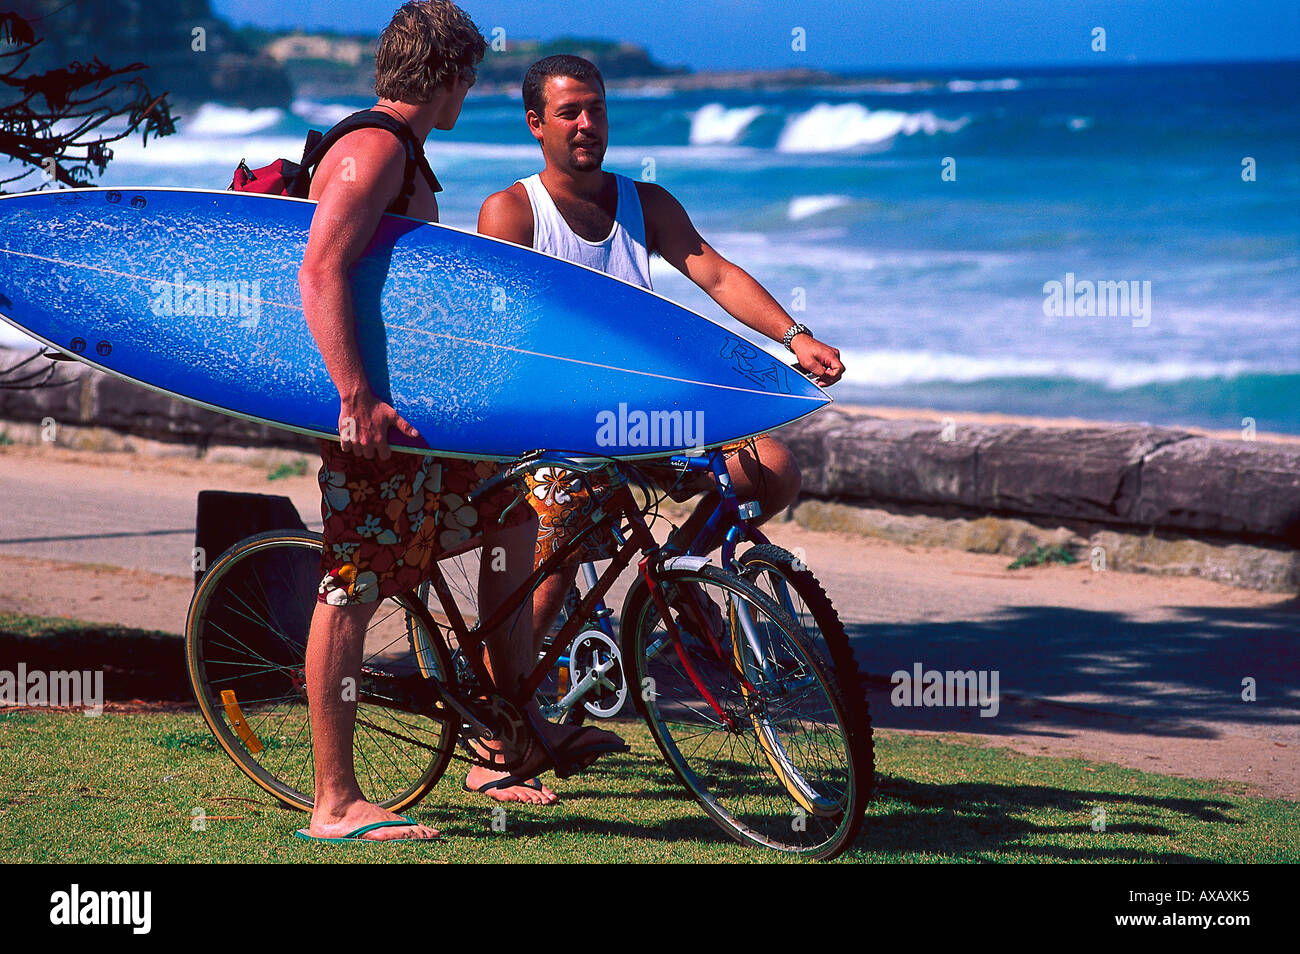 Surfer Auf Dem Fahrrad, Manly Beach, New South Wales Australien Stockfoto